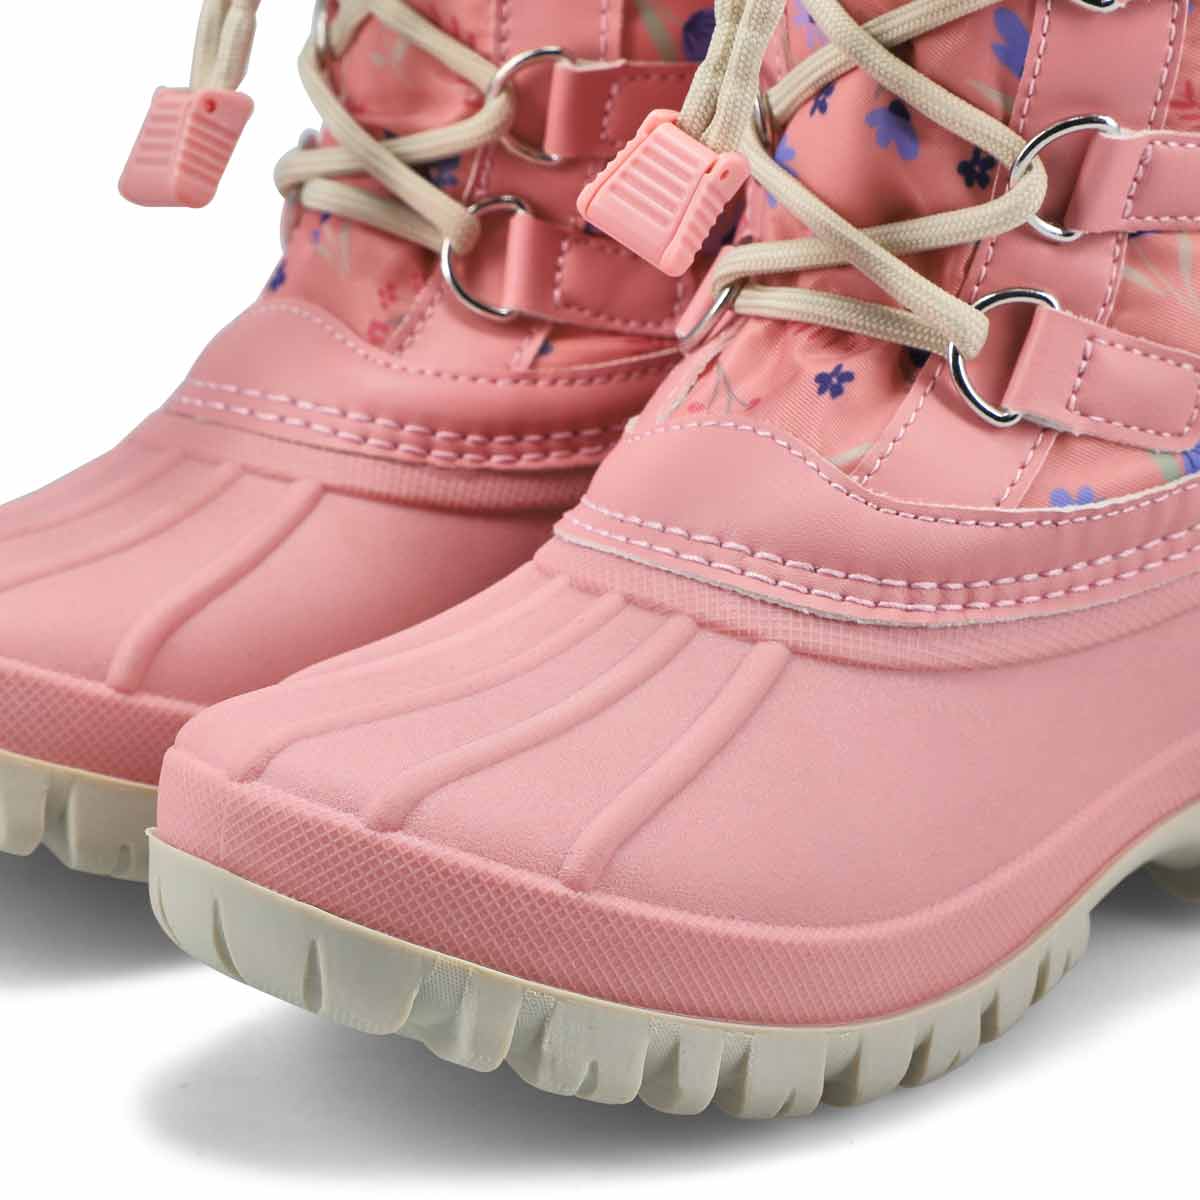 Girls' Charm Pull On Waterproof Winter Boot - Pink